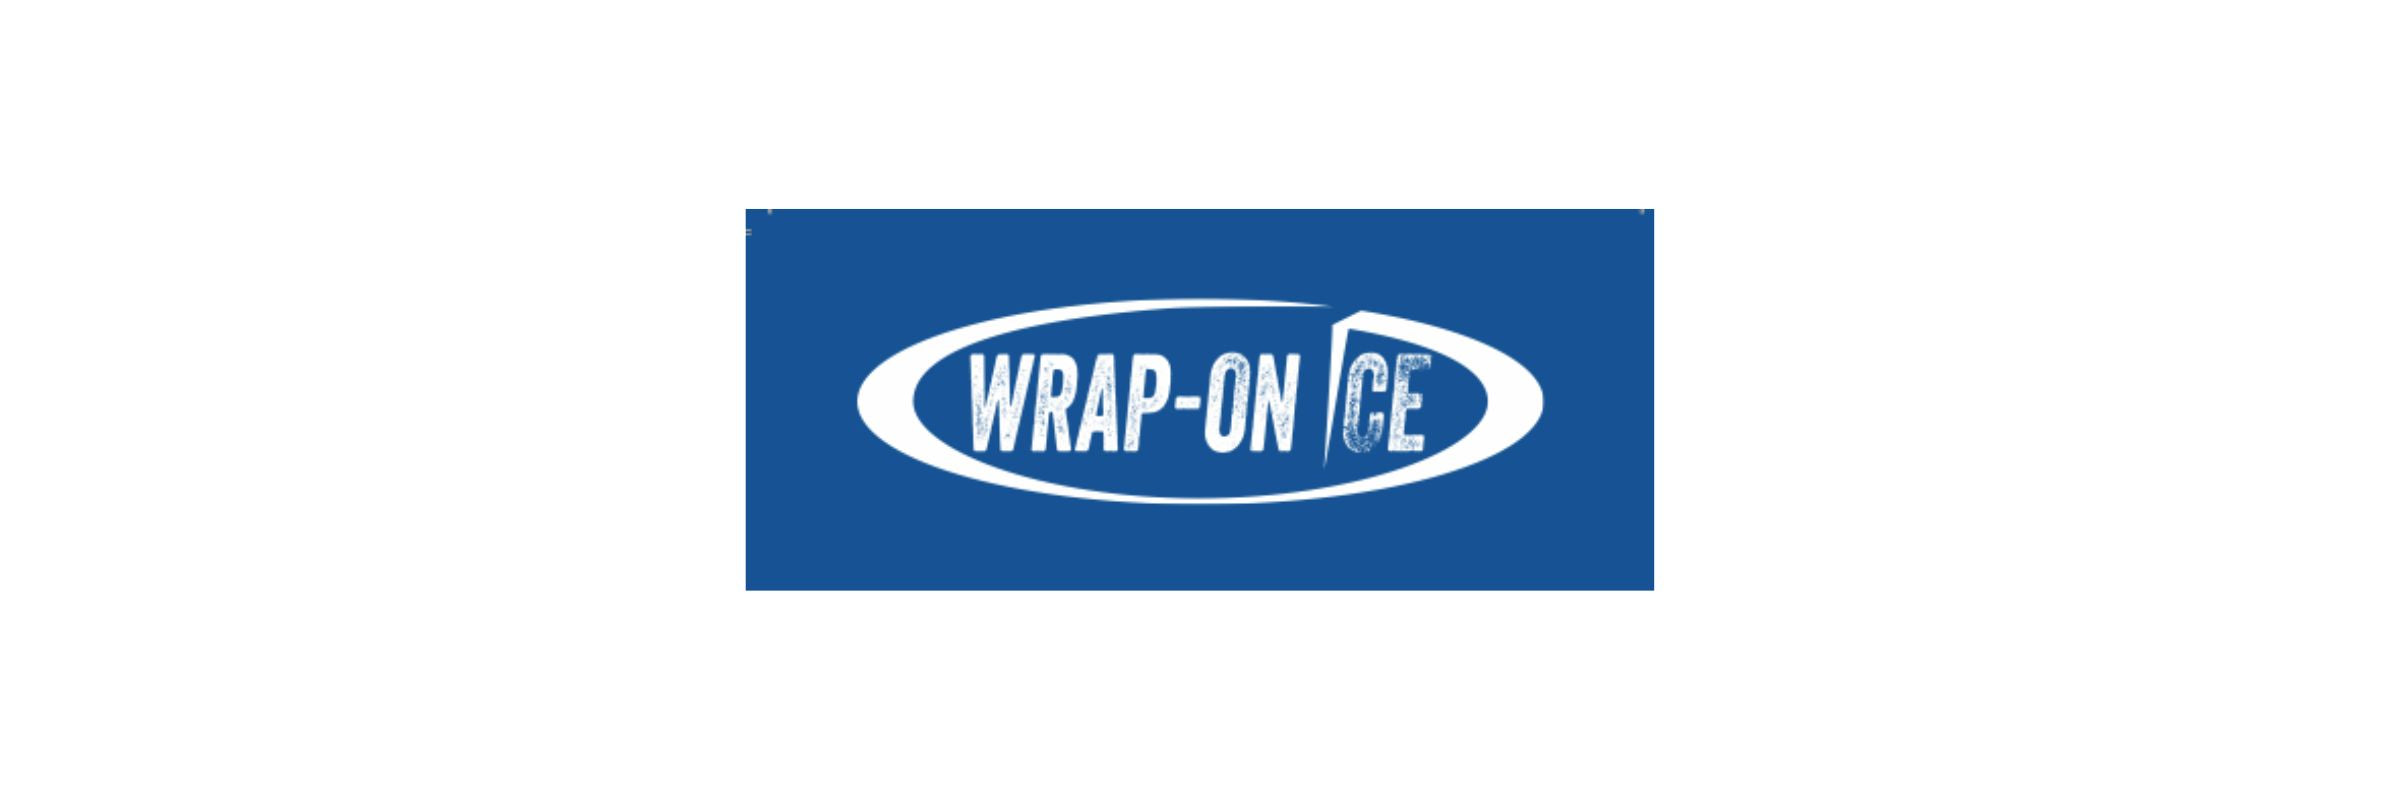 wrap on ice wrap